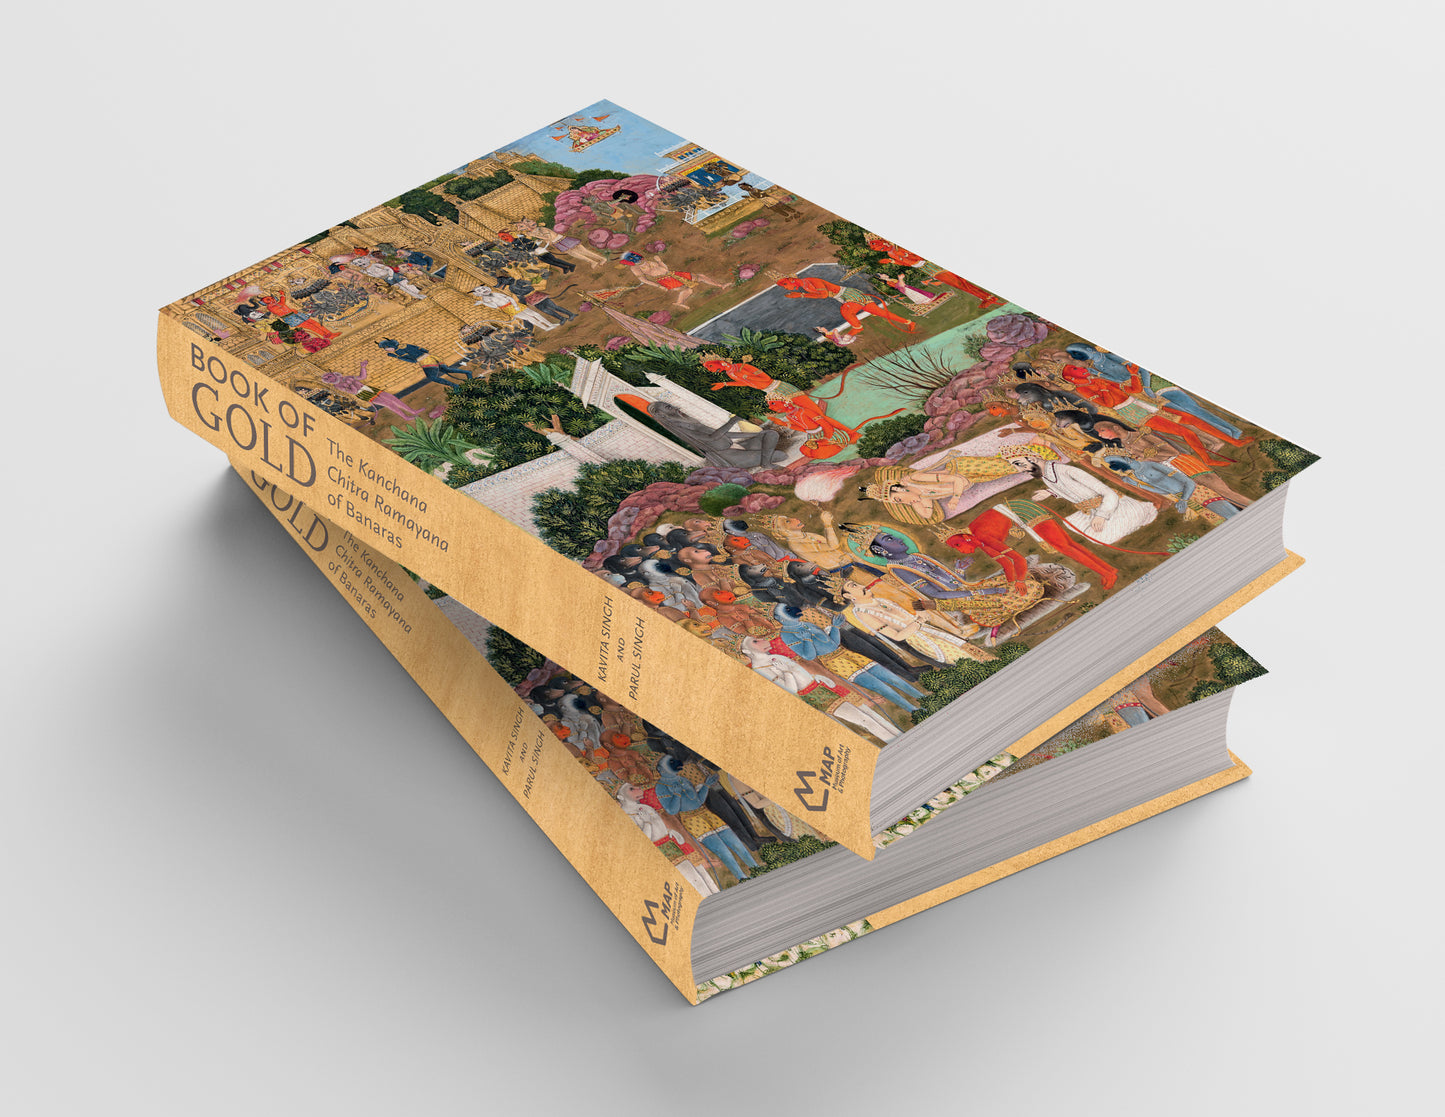 Book of Gold The Kanchana Chitra Ramayana of Banaras By Kavita Singh and Parul Singh